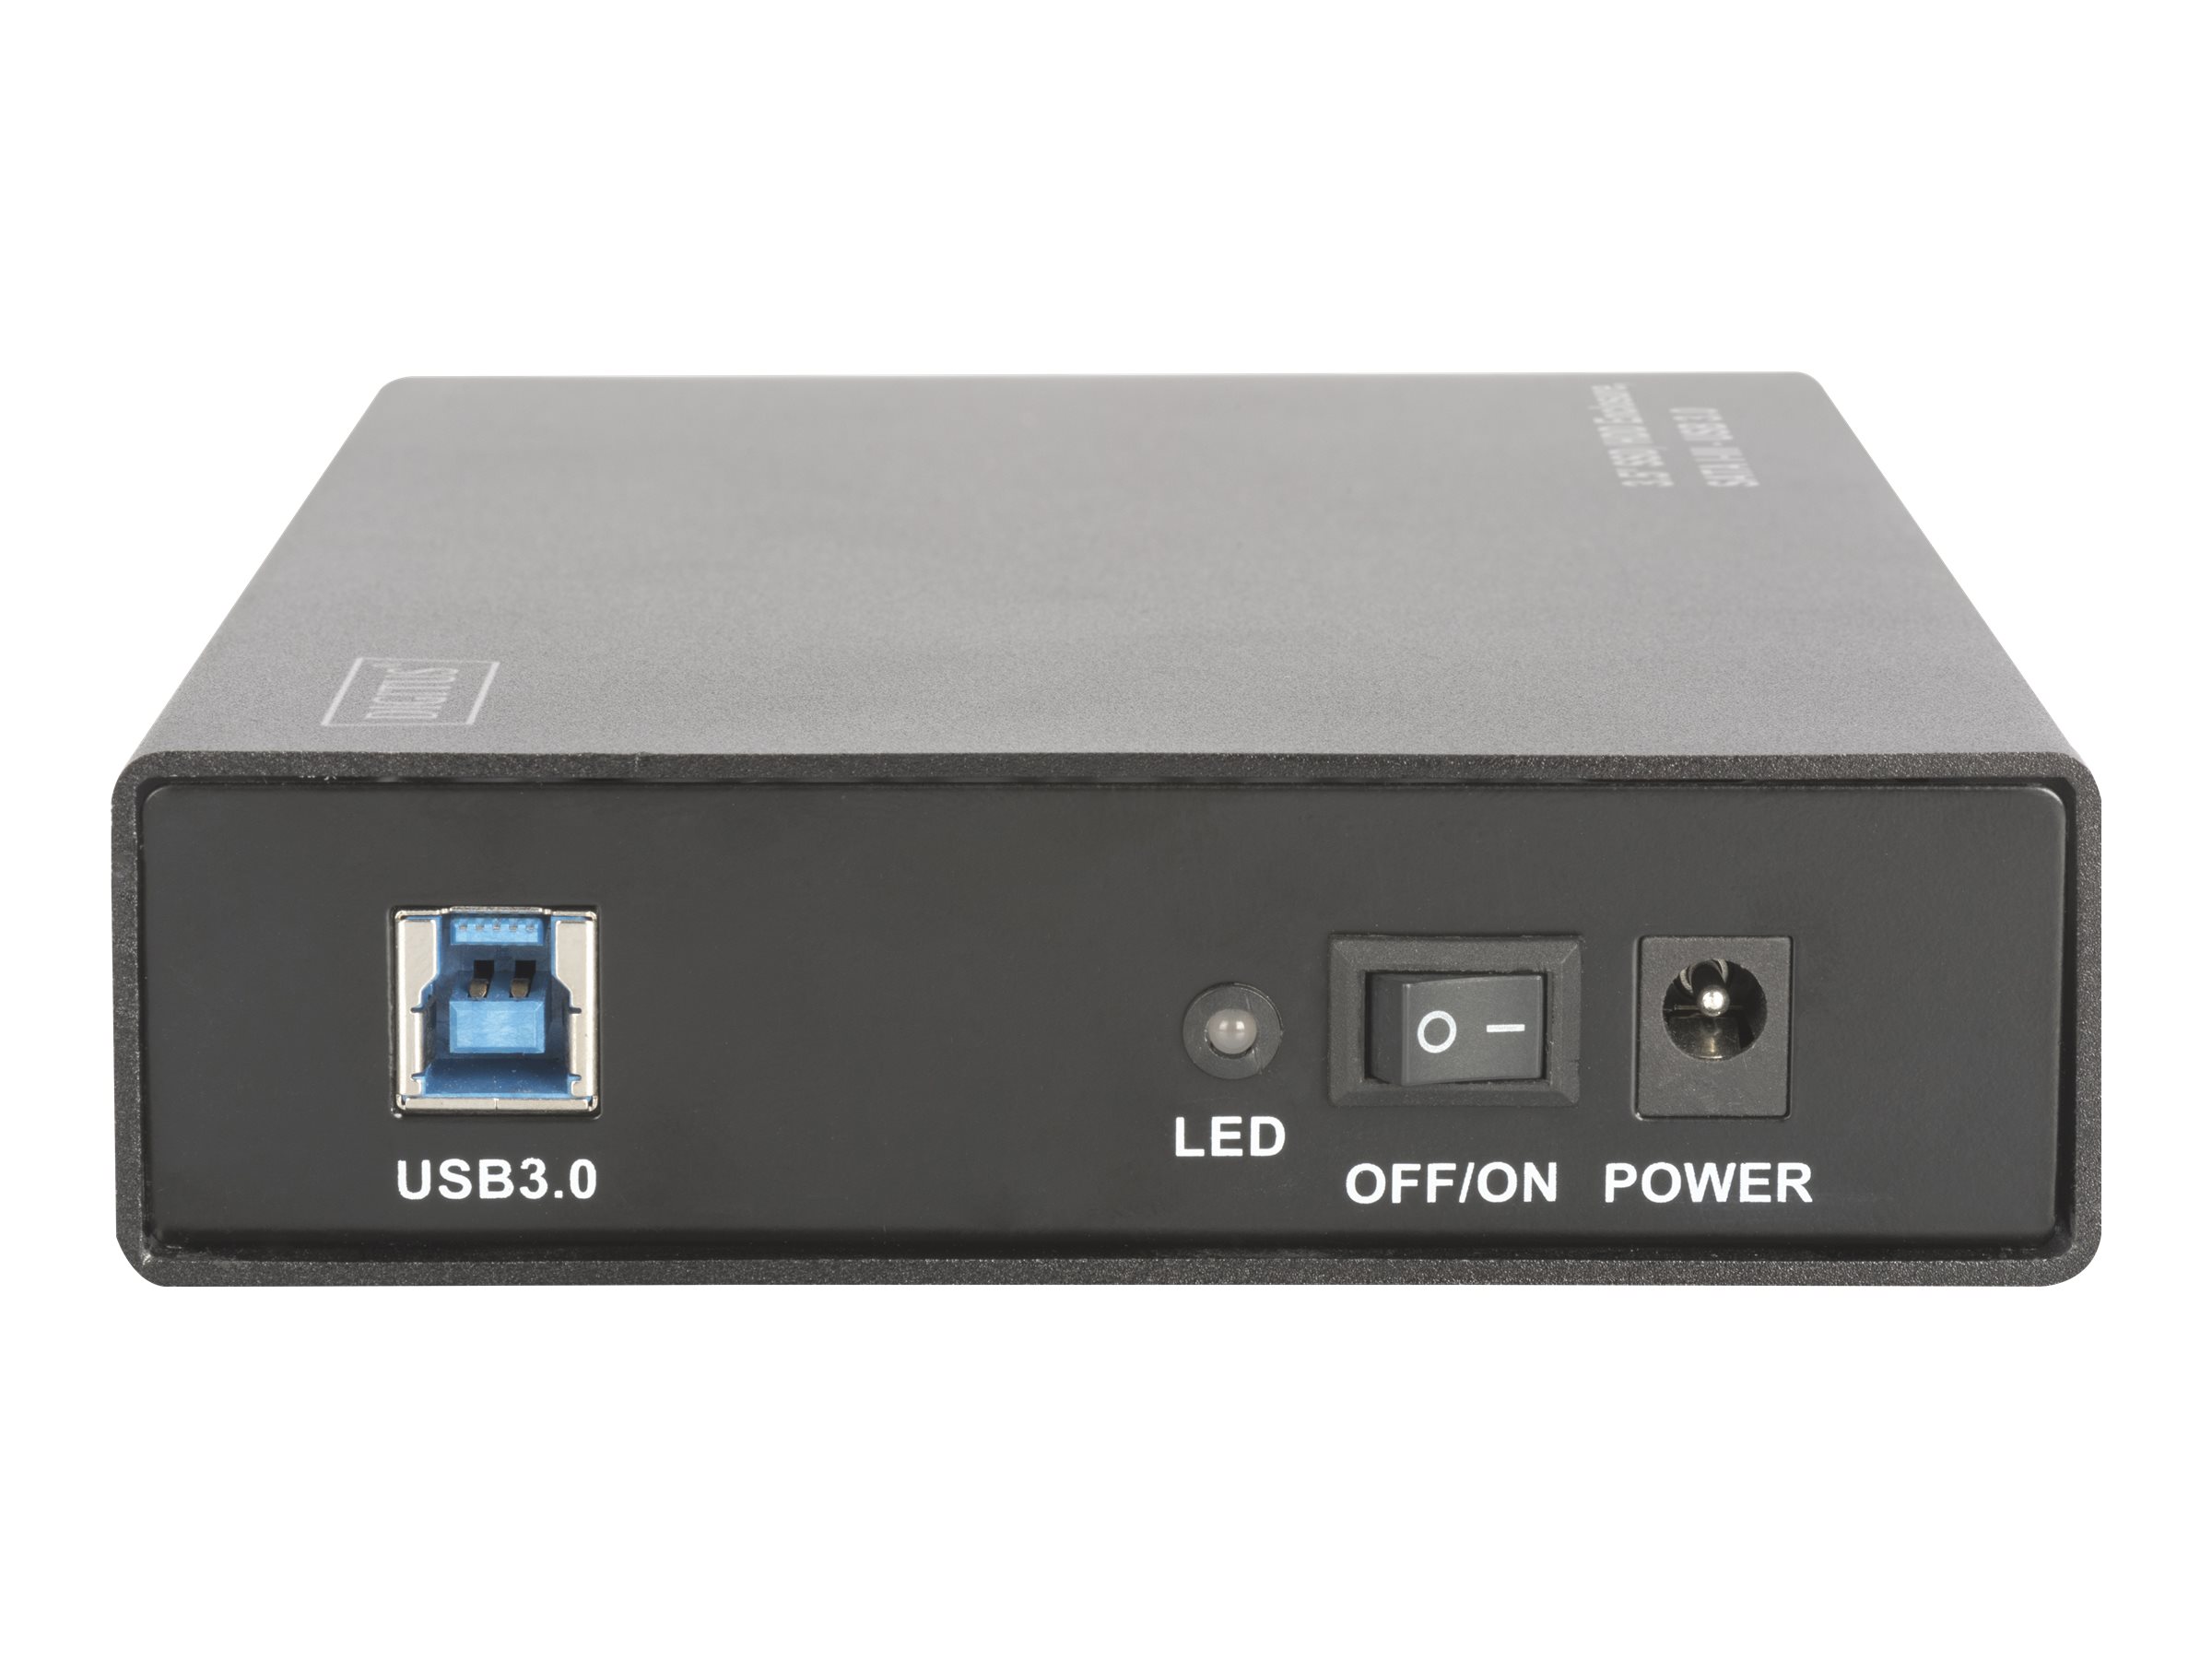 DIGITUS 3,5" SSD/HDD-Gehäuse, SATA 3 - USB 3.0